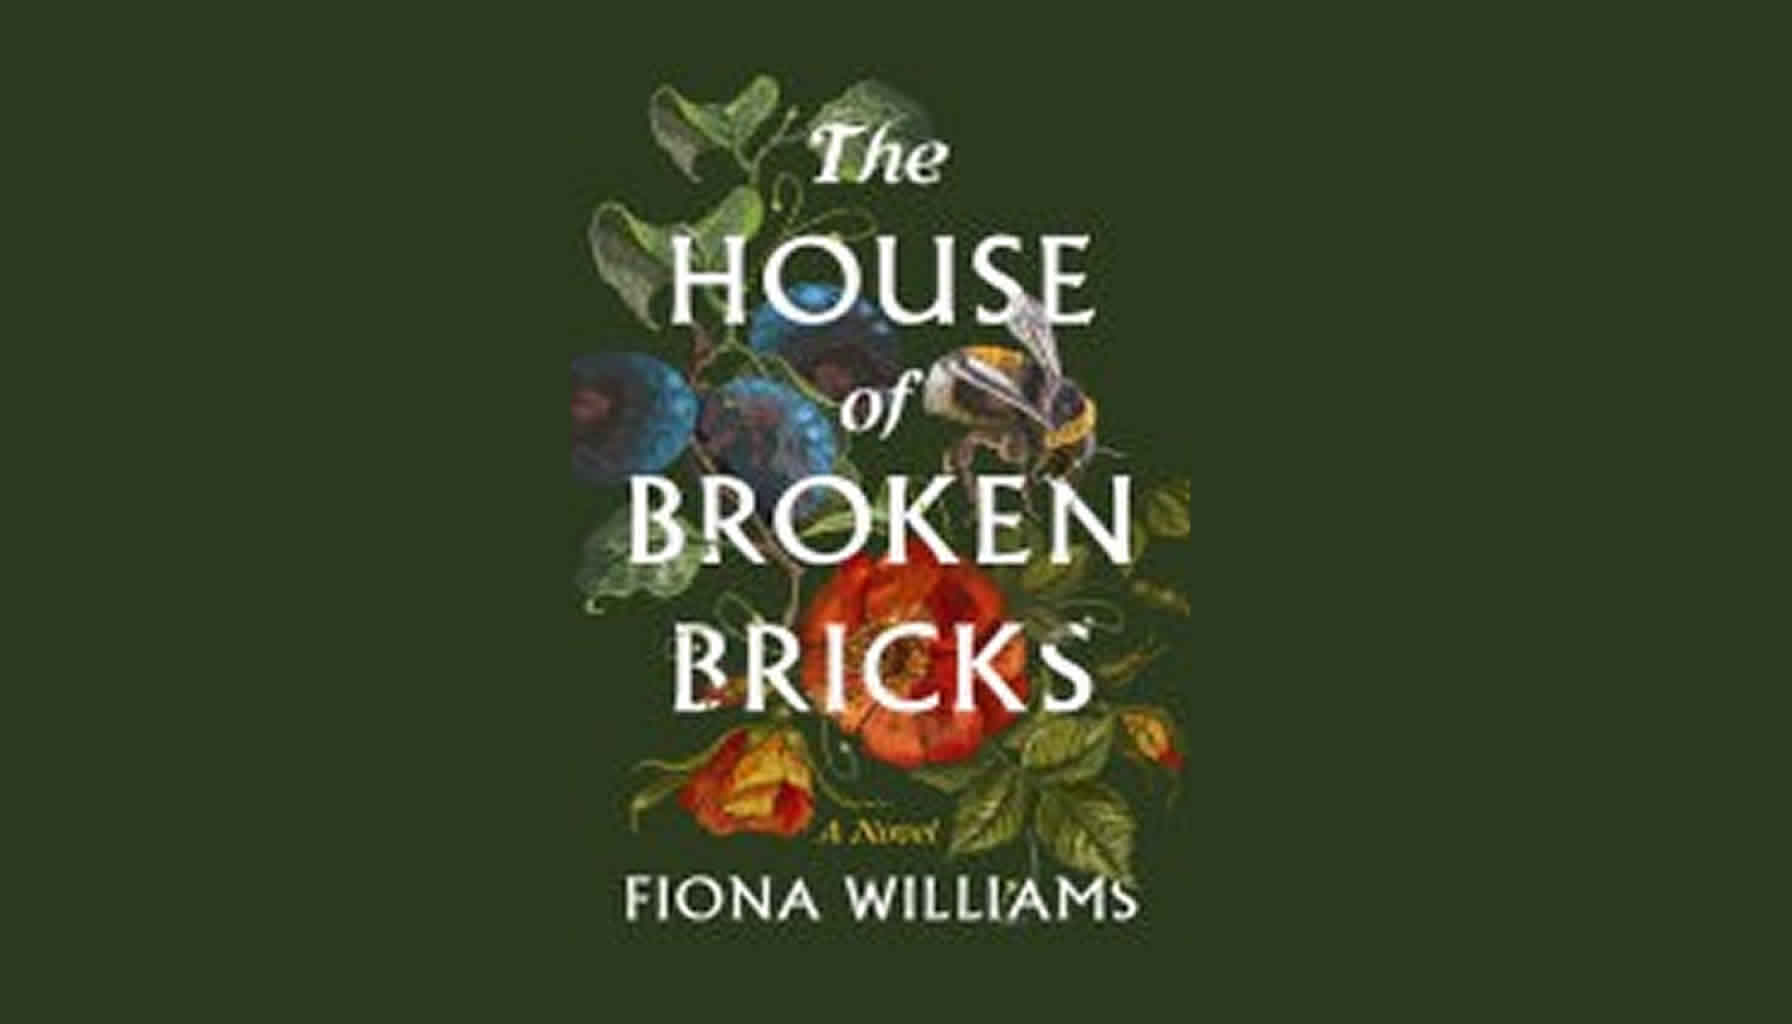 The House of Broken Bricks: A Novel